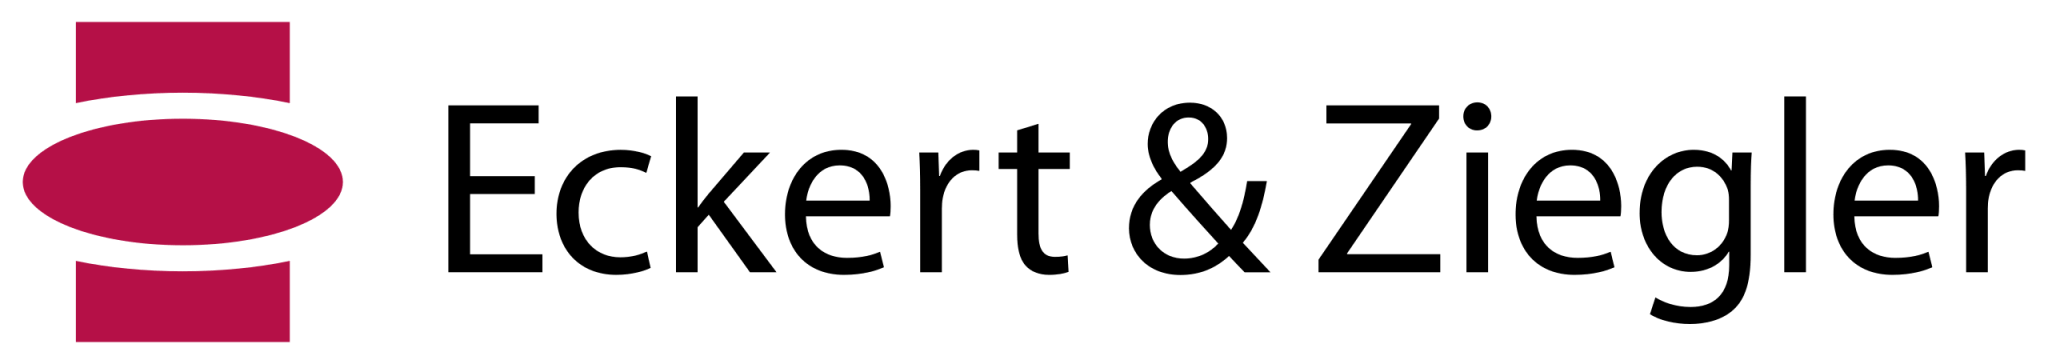 Representation of the logo of Eckert & Ziegler Radiopharma GmbH